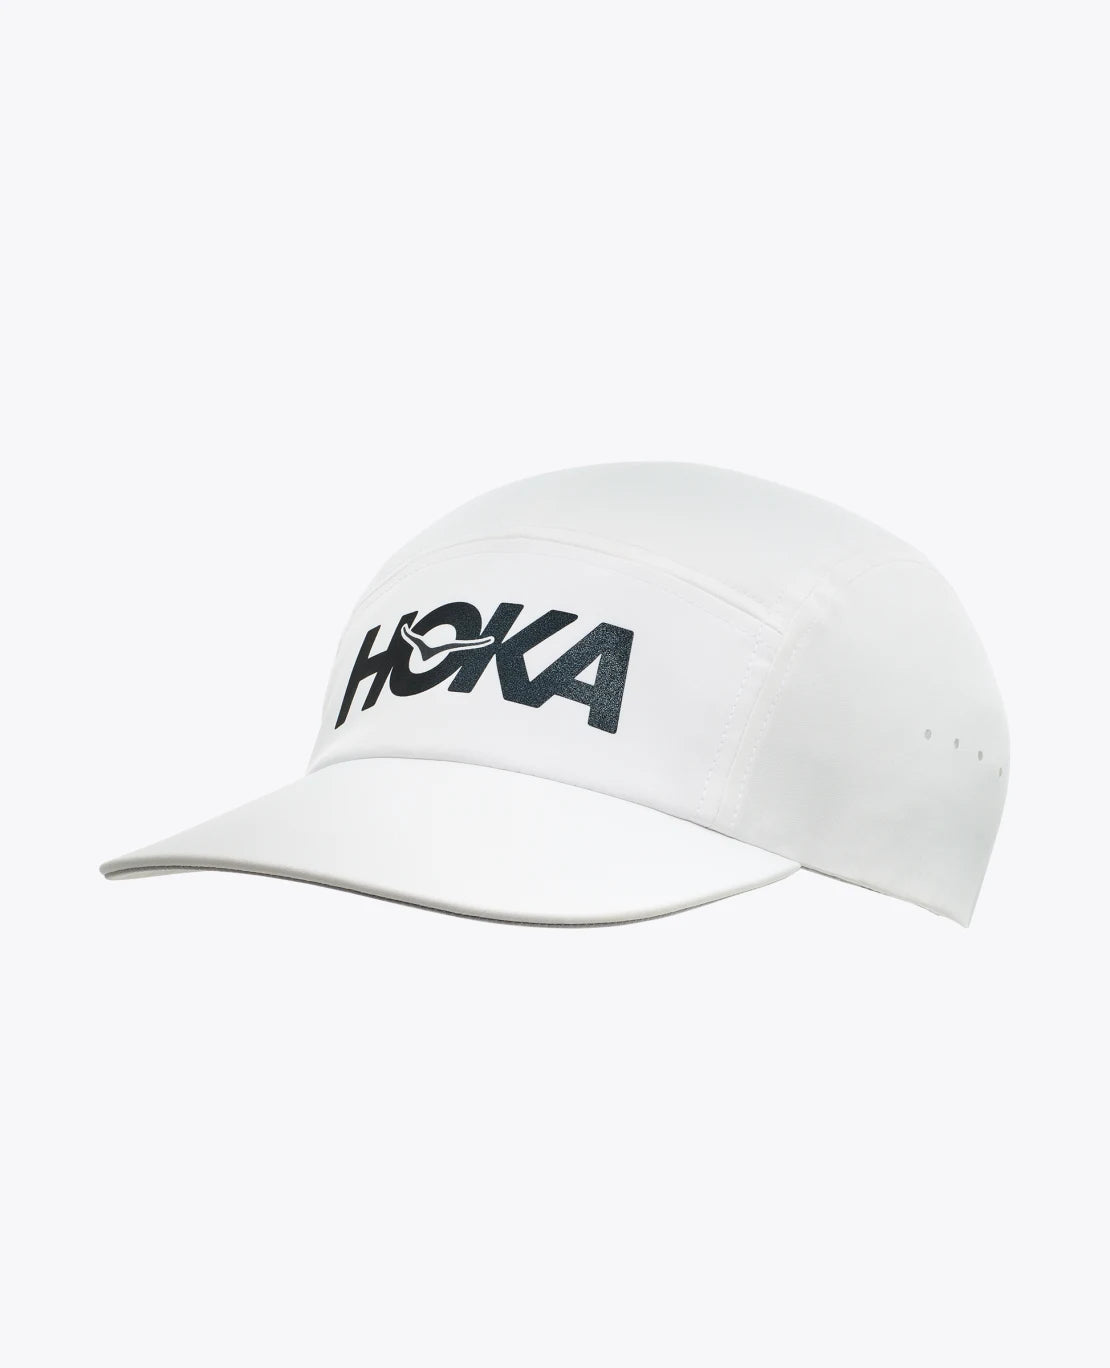 HOKA Performance Hat